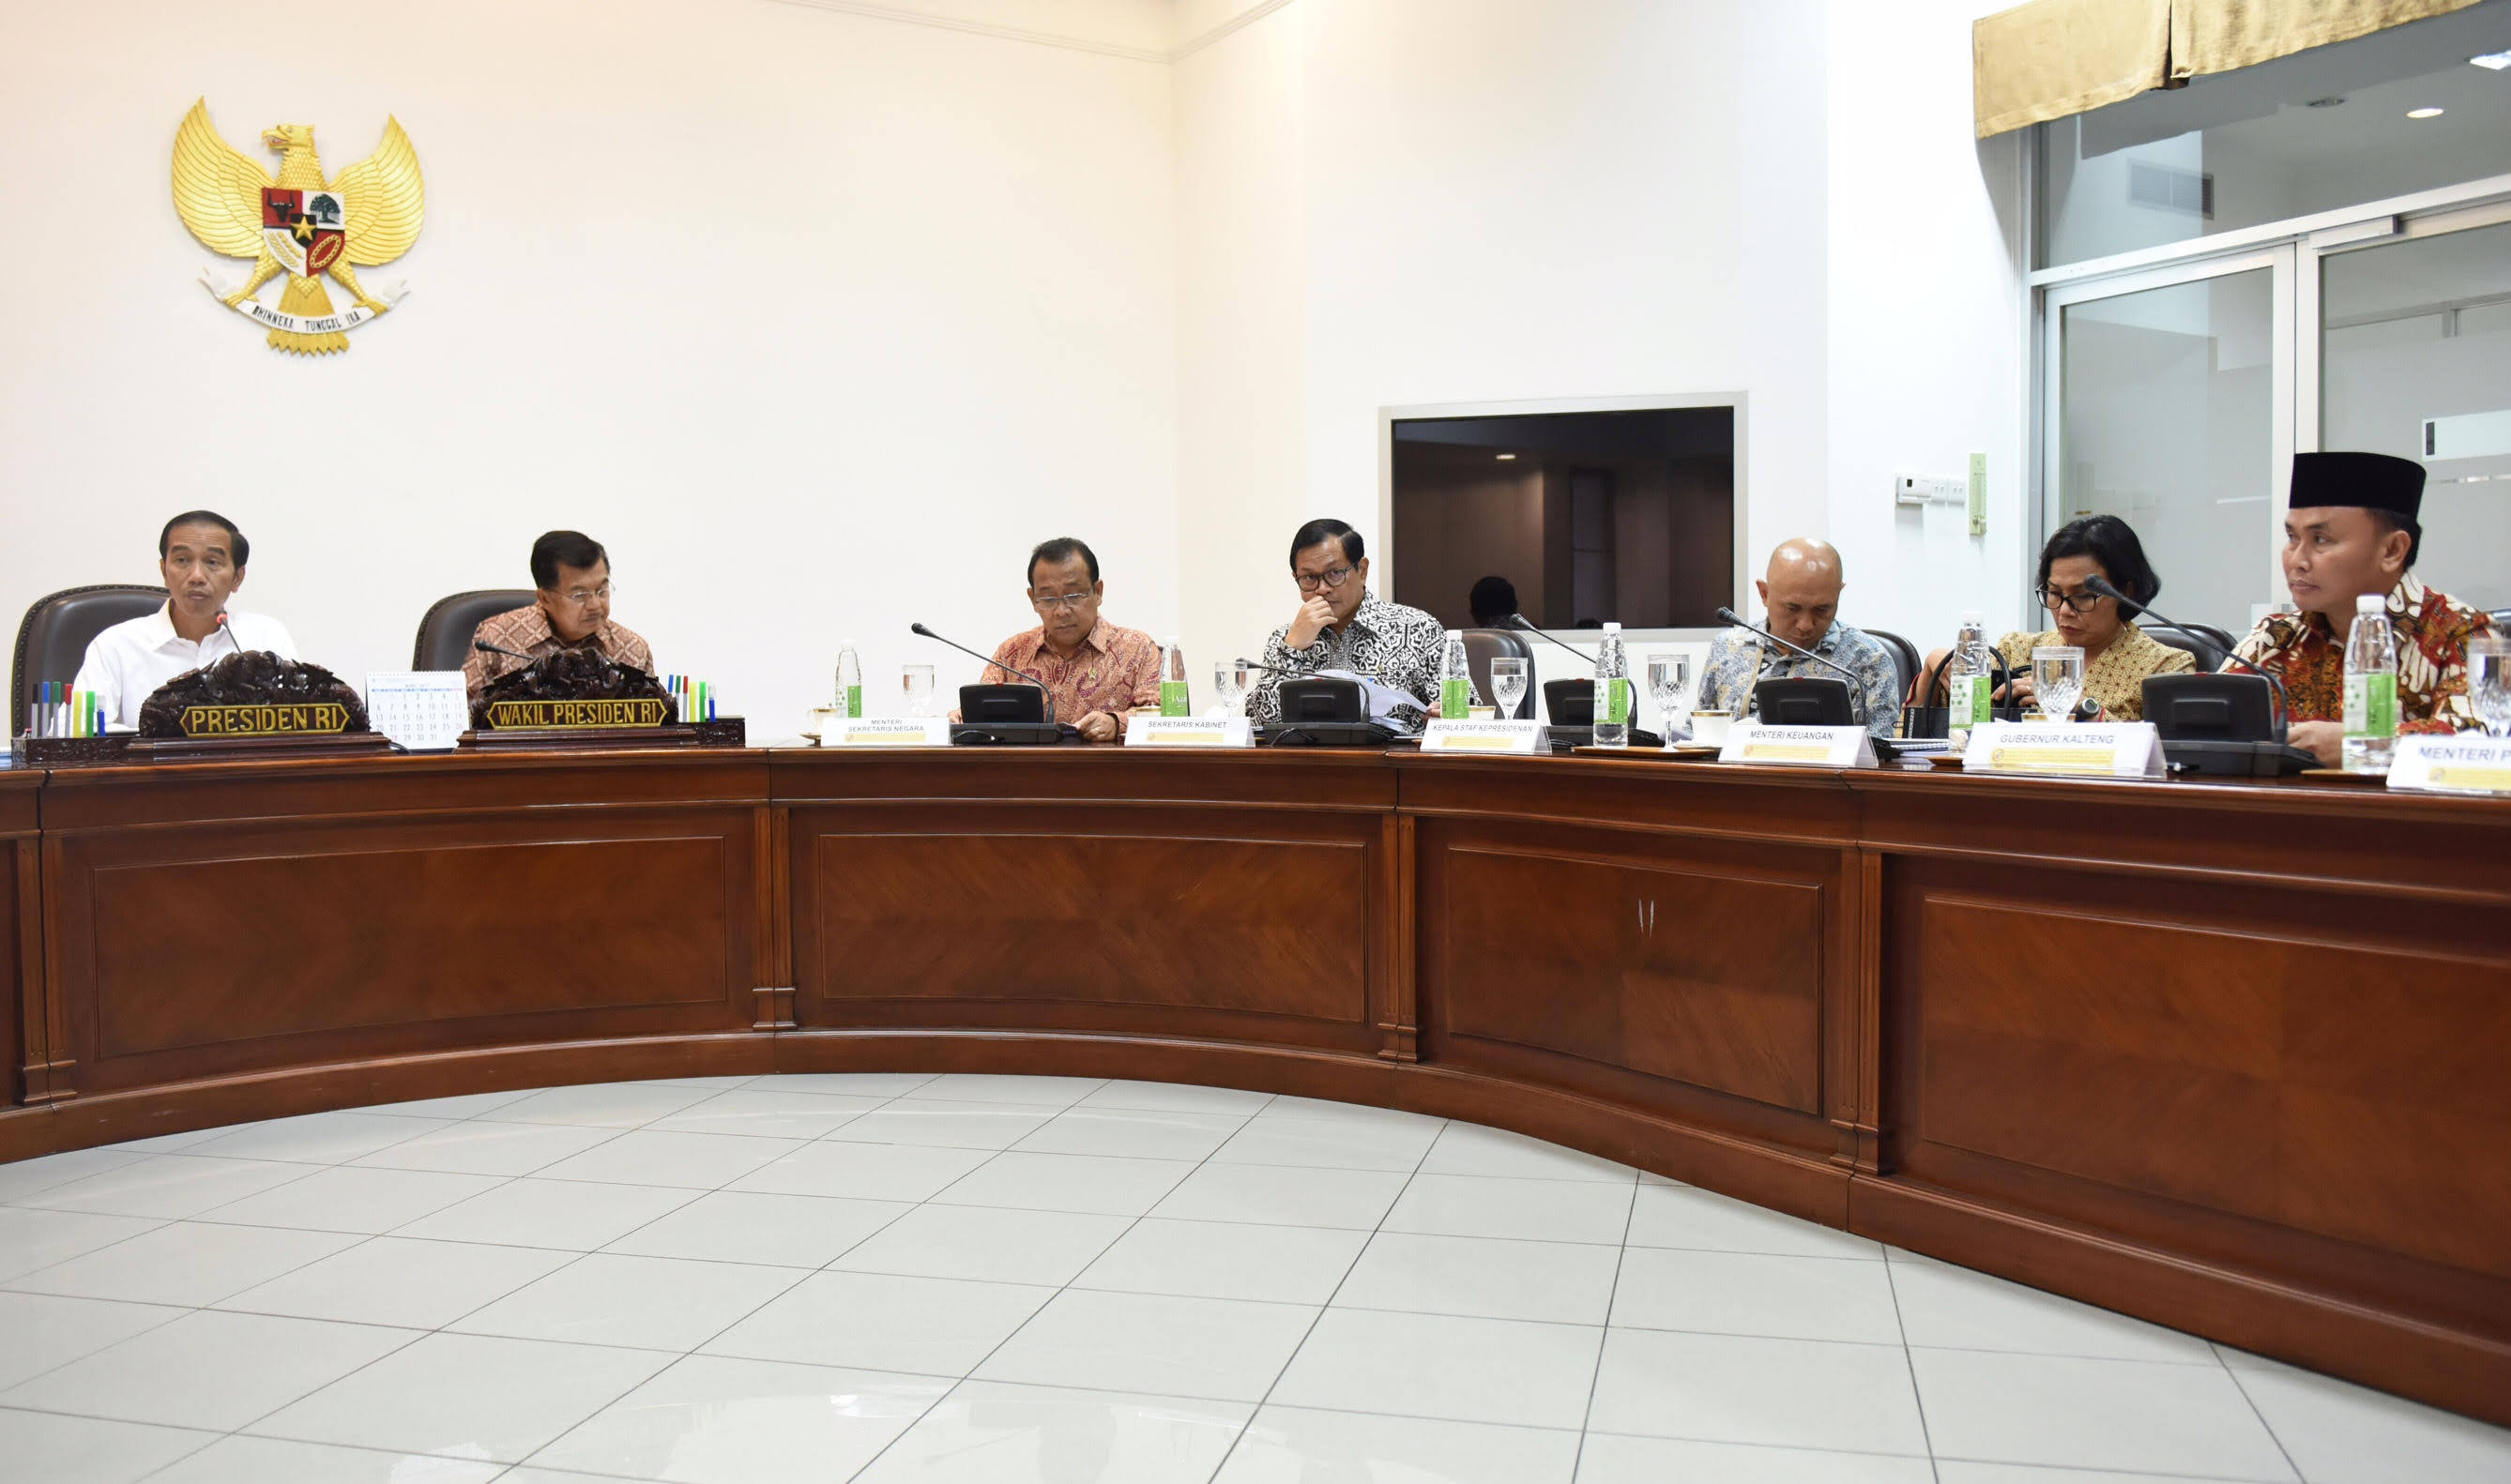 Presiden Jokowi didampingi Wakil Presiden Jusuf Kalla memimpin rapat terbatas, di Kantor Presiden, Jakarta, Senin (14/2) siang. (Foto: Rahmat/Humas)